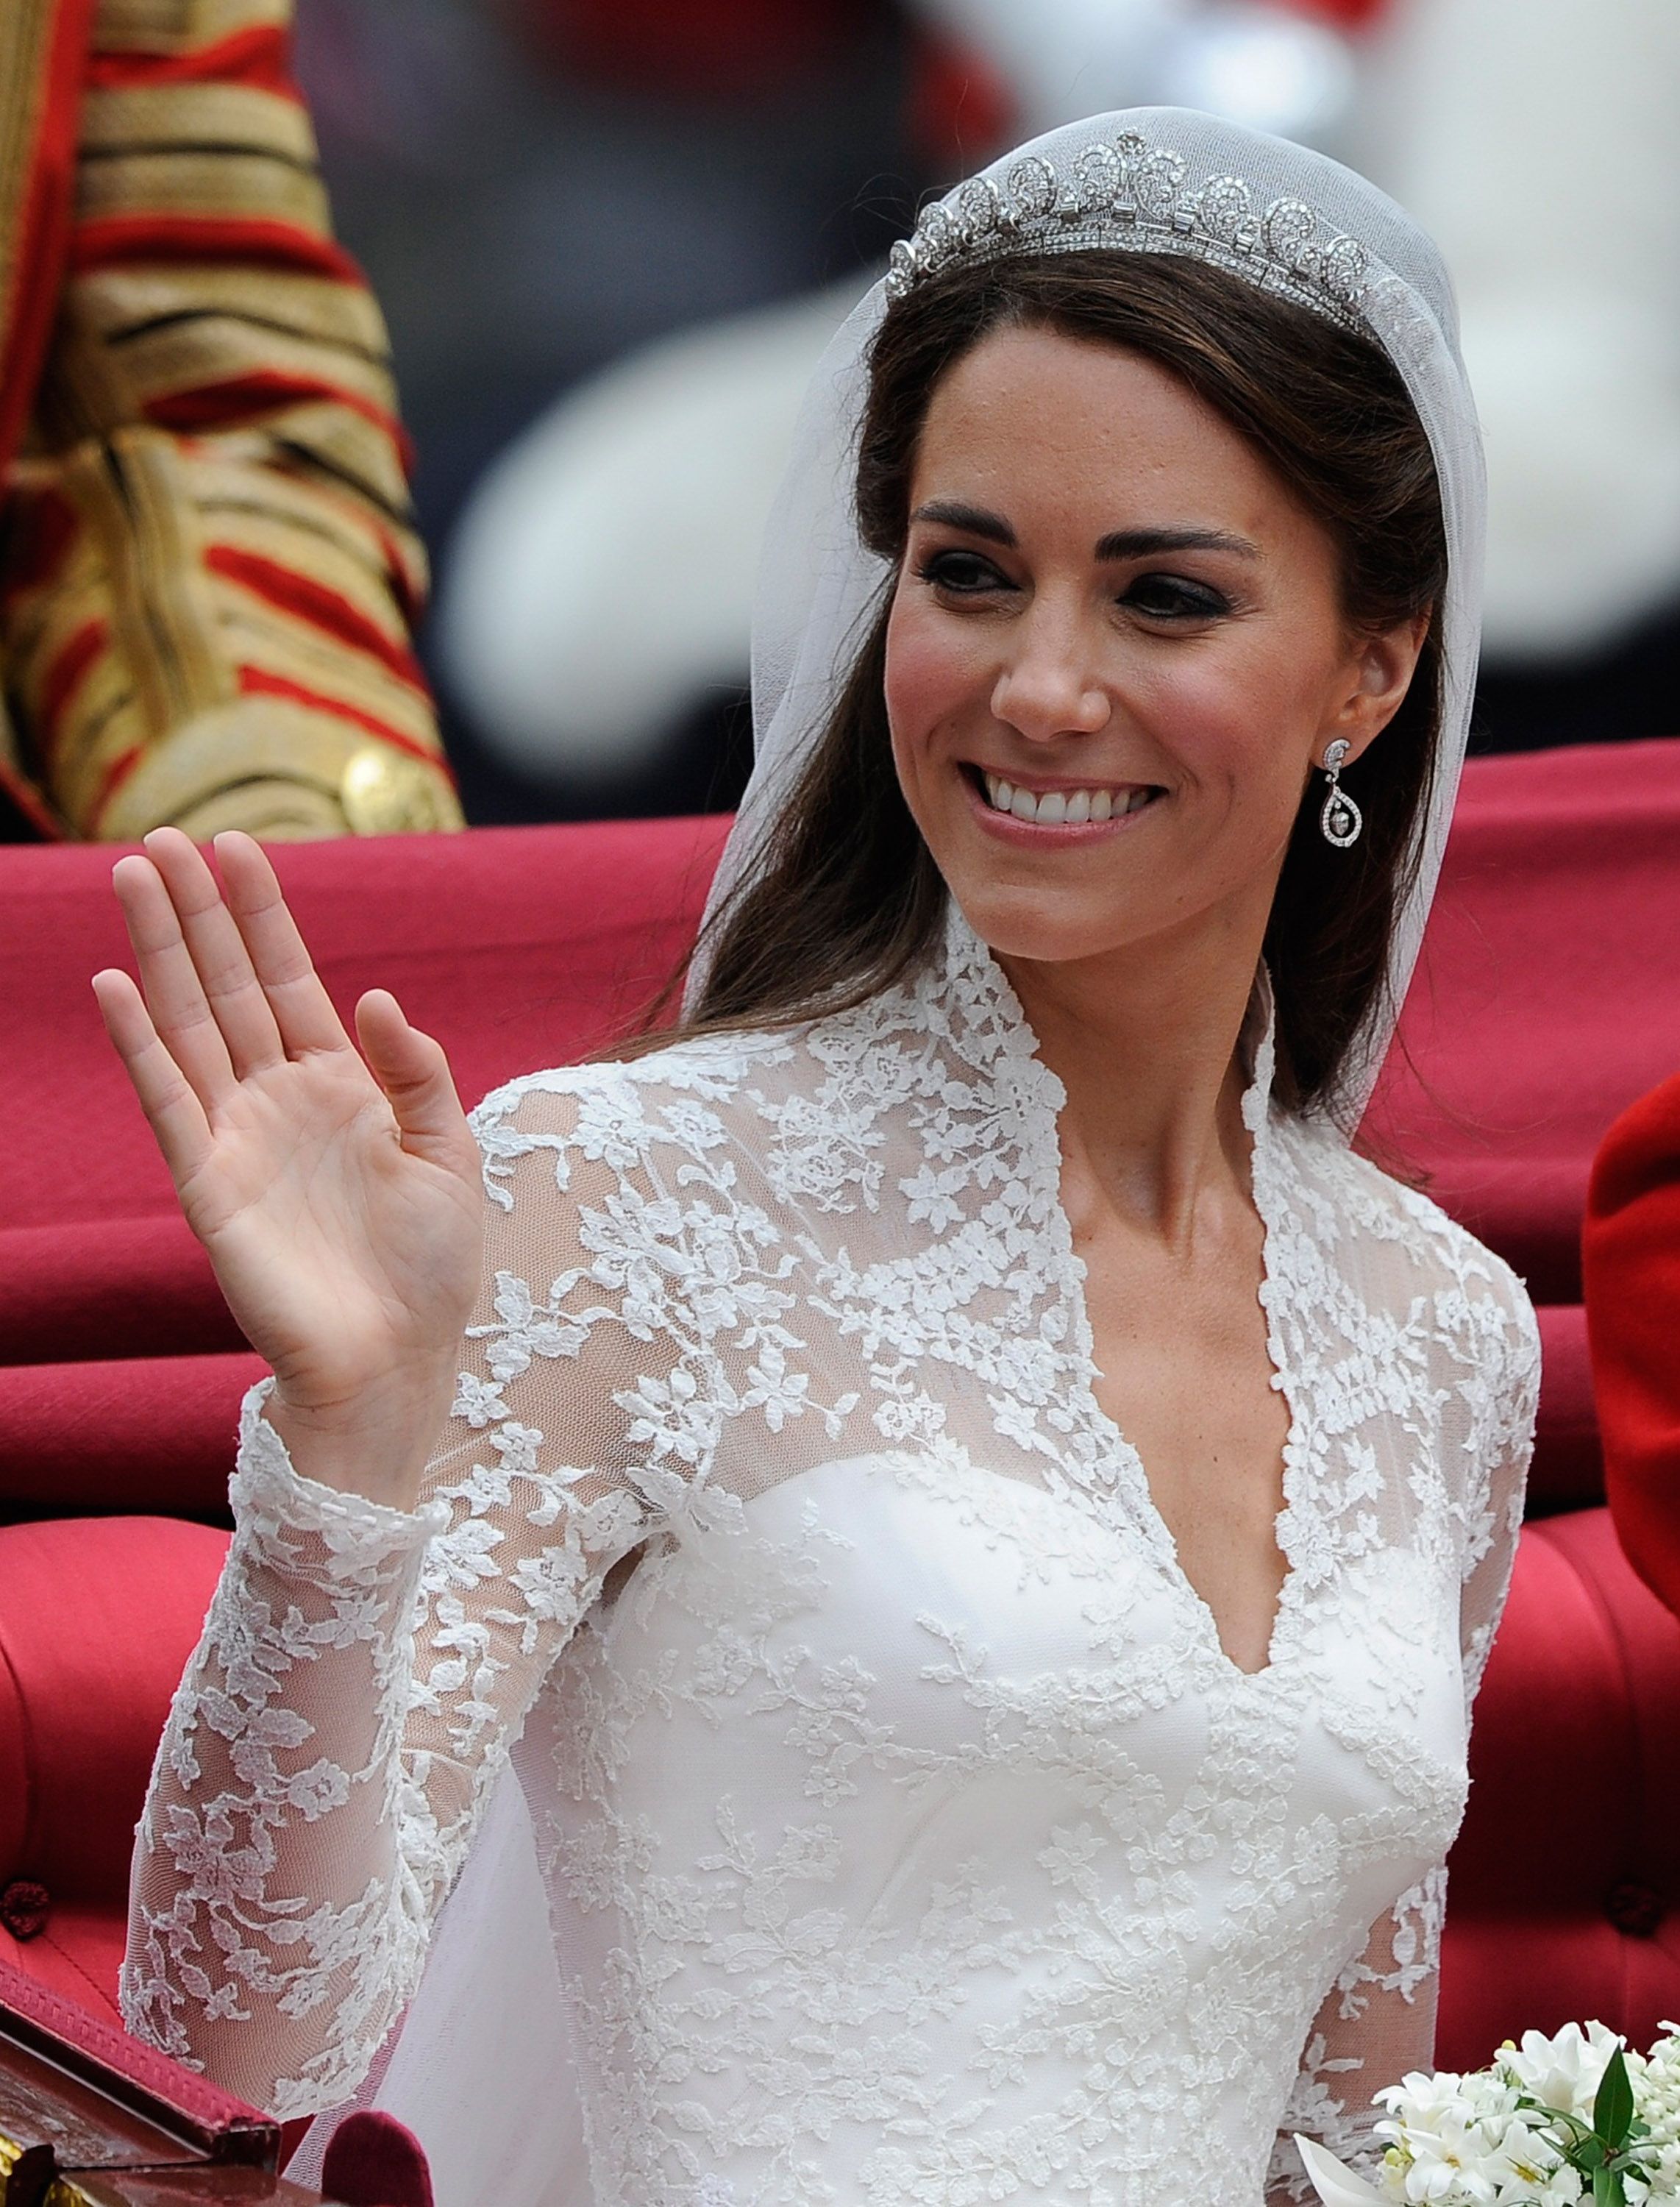 Kates wedding tiara  jewels on display at Buckingham Palace  The  Jewellery Editor